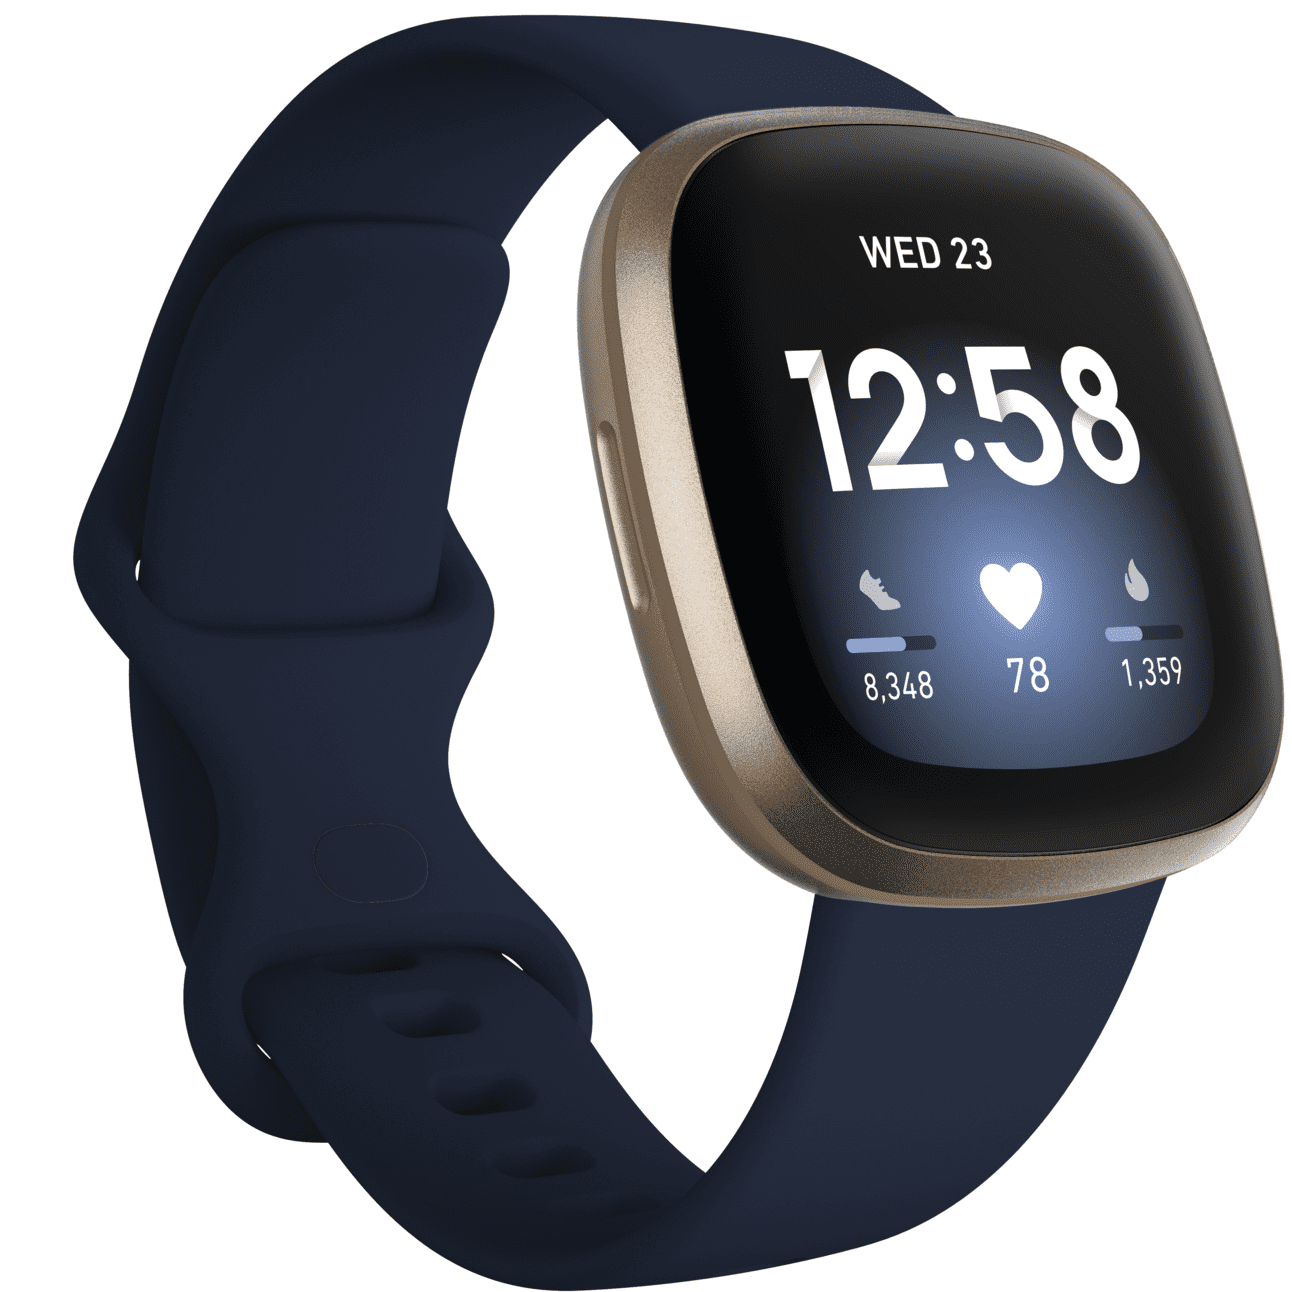 Stone/Mist Gray for sale online Fitbit Versa 2 Activity Tracker 